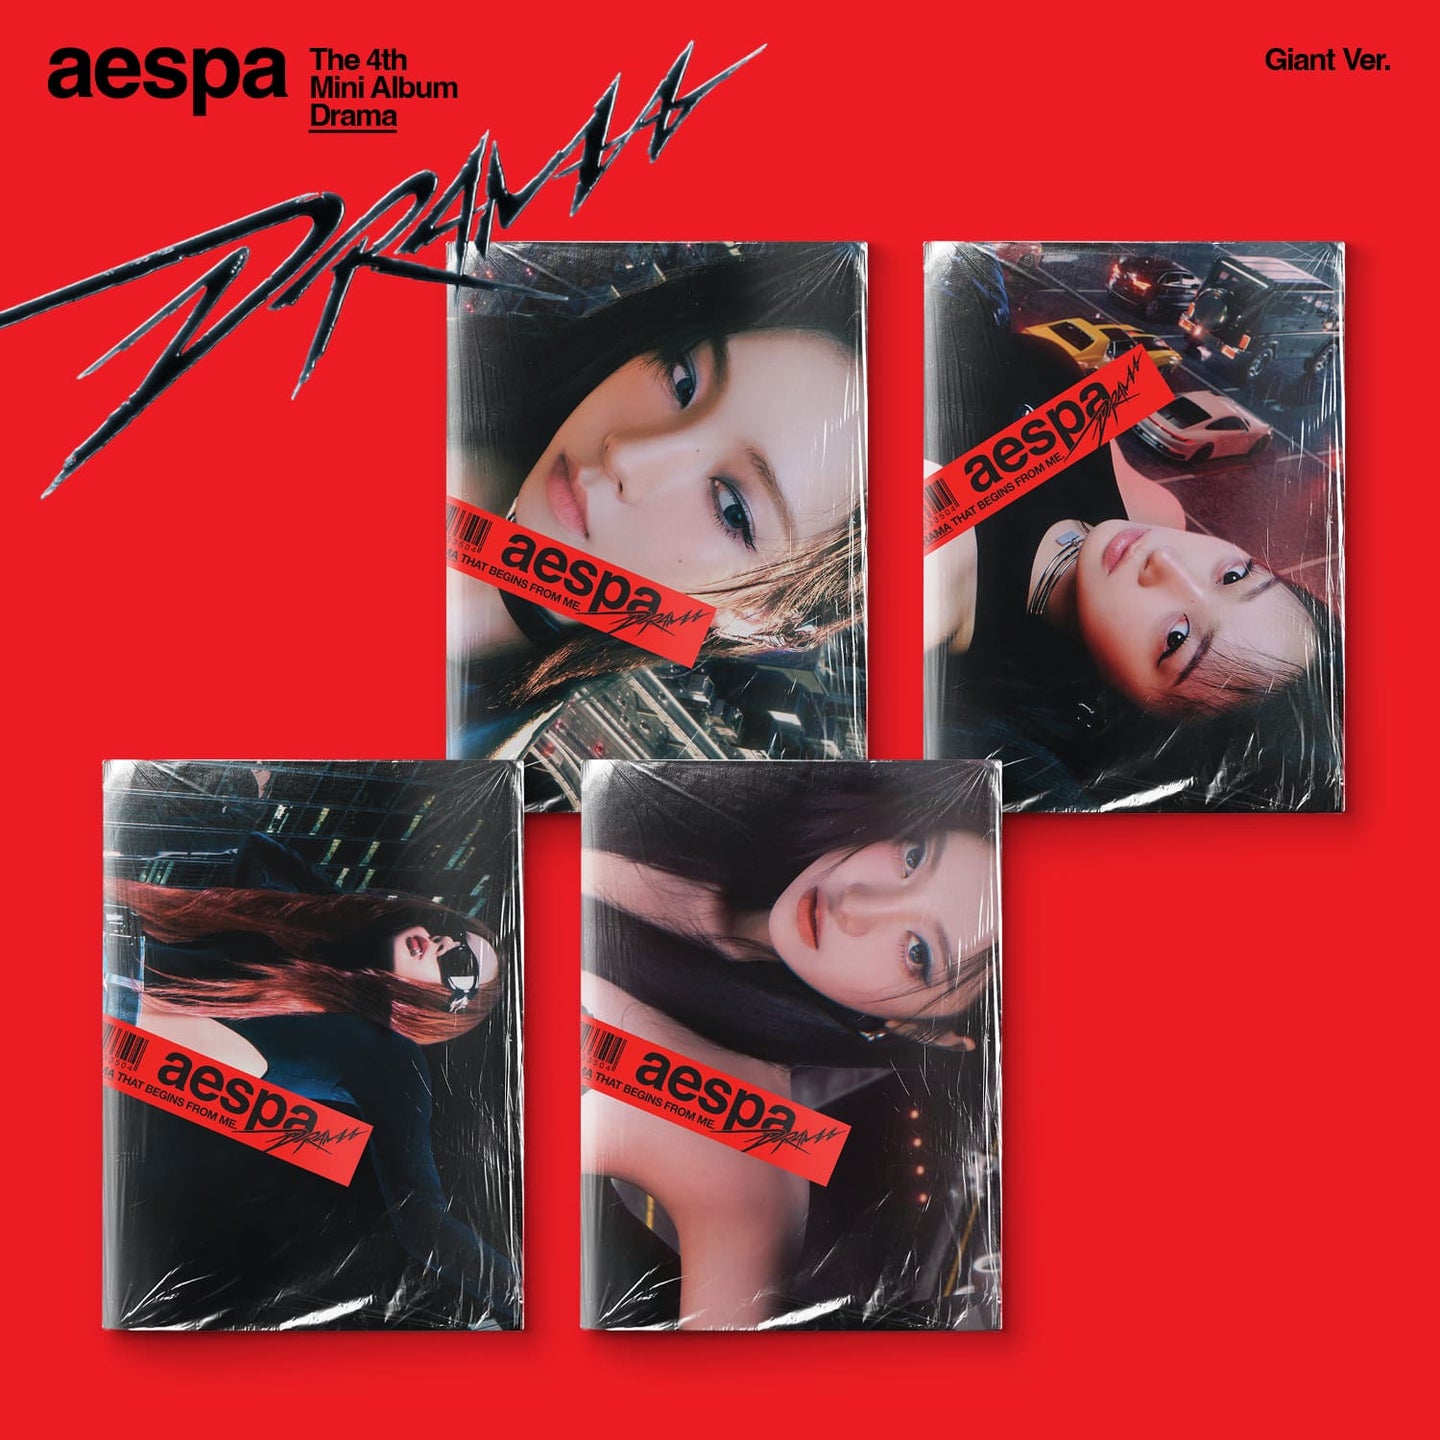 aespa Mini Album Vol. 4 – Drama (Giant Ver.) (Random)